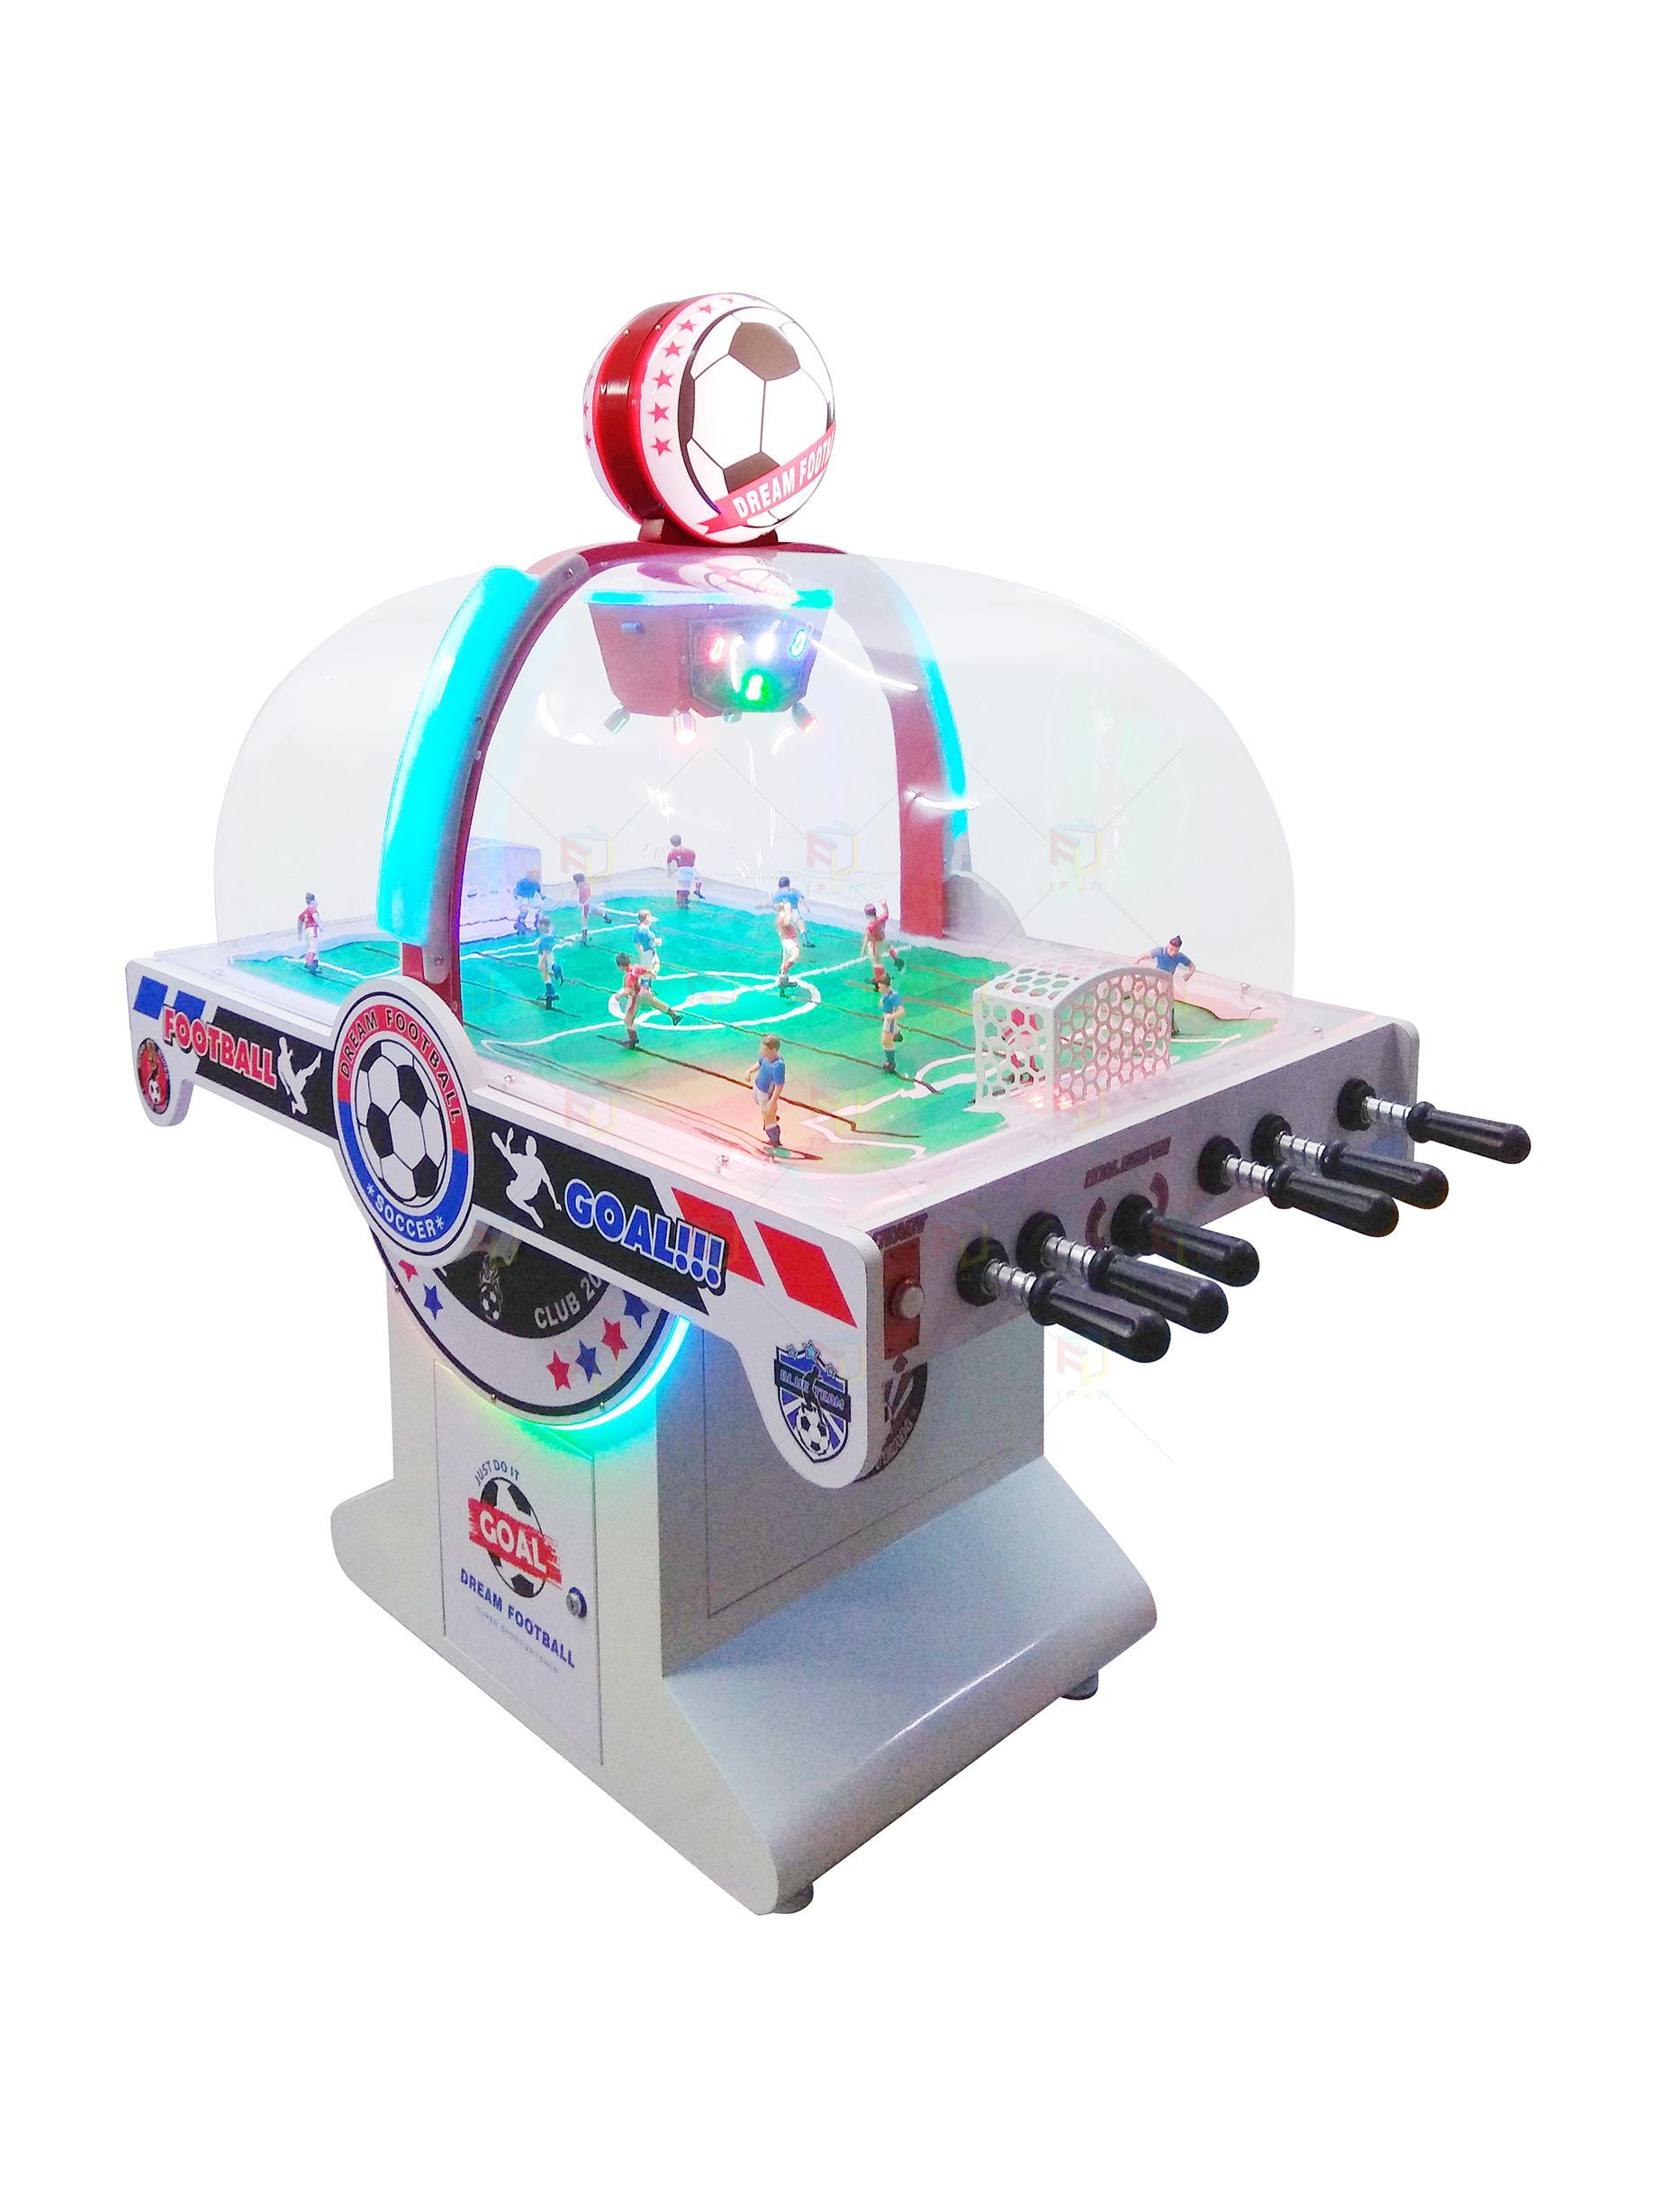 Table Football Machine